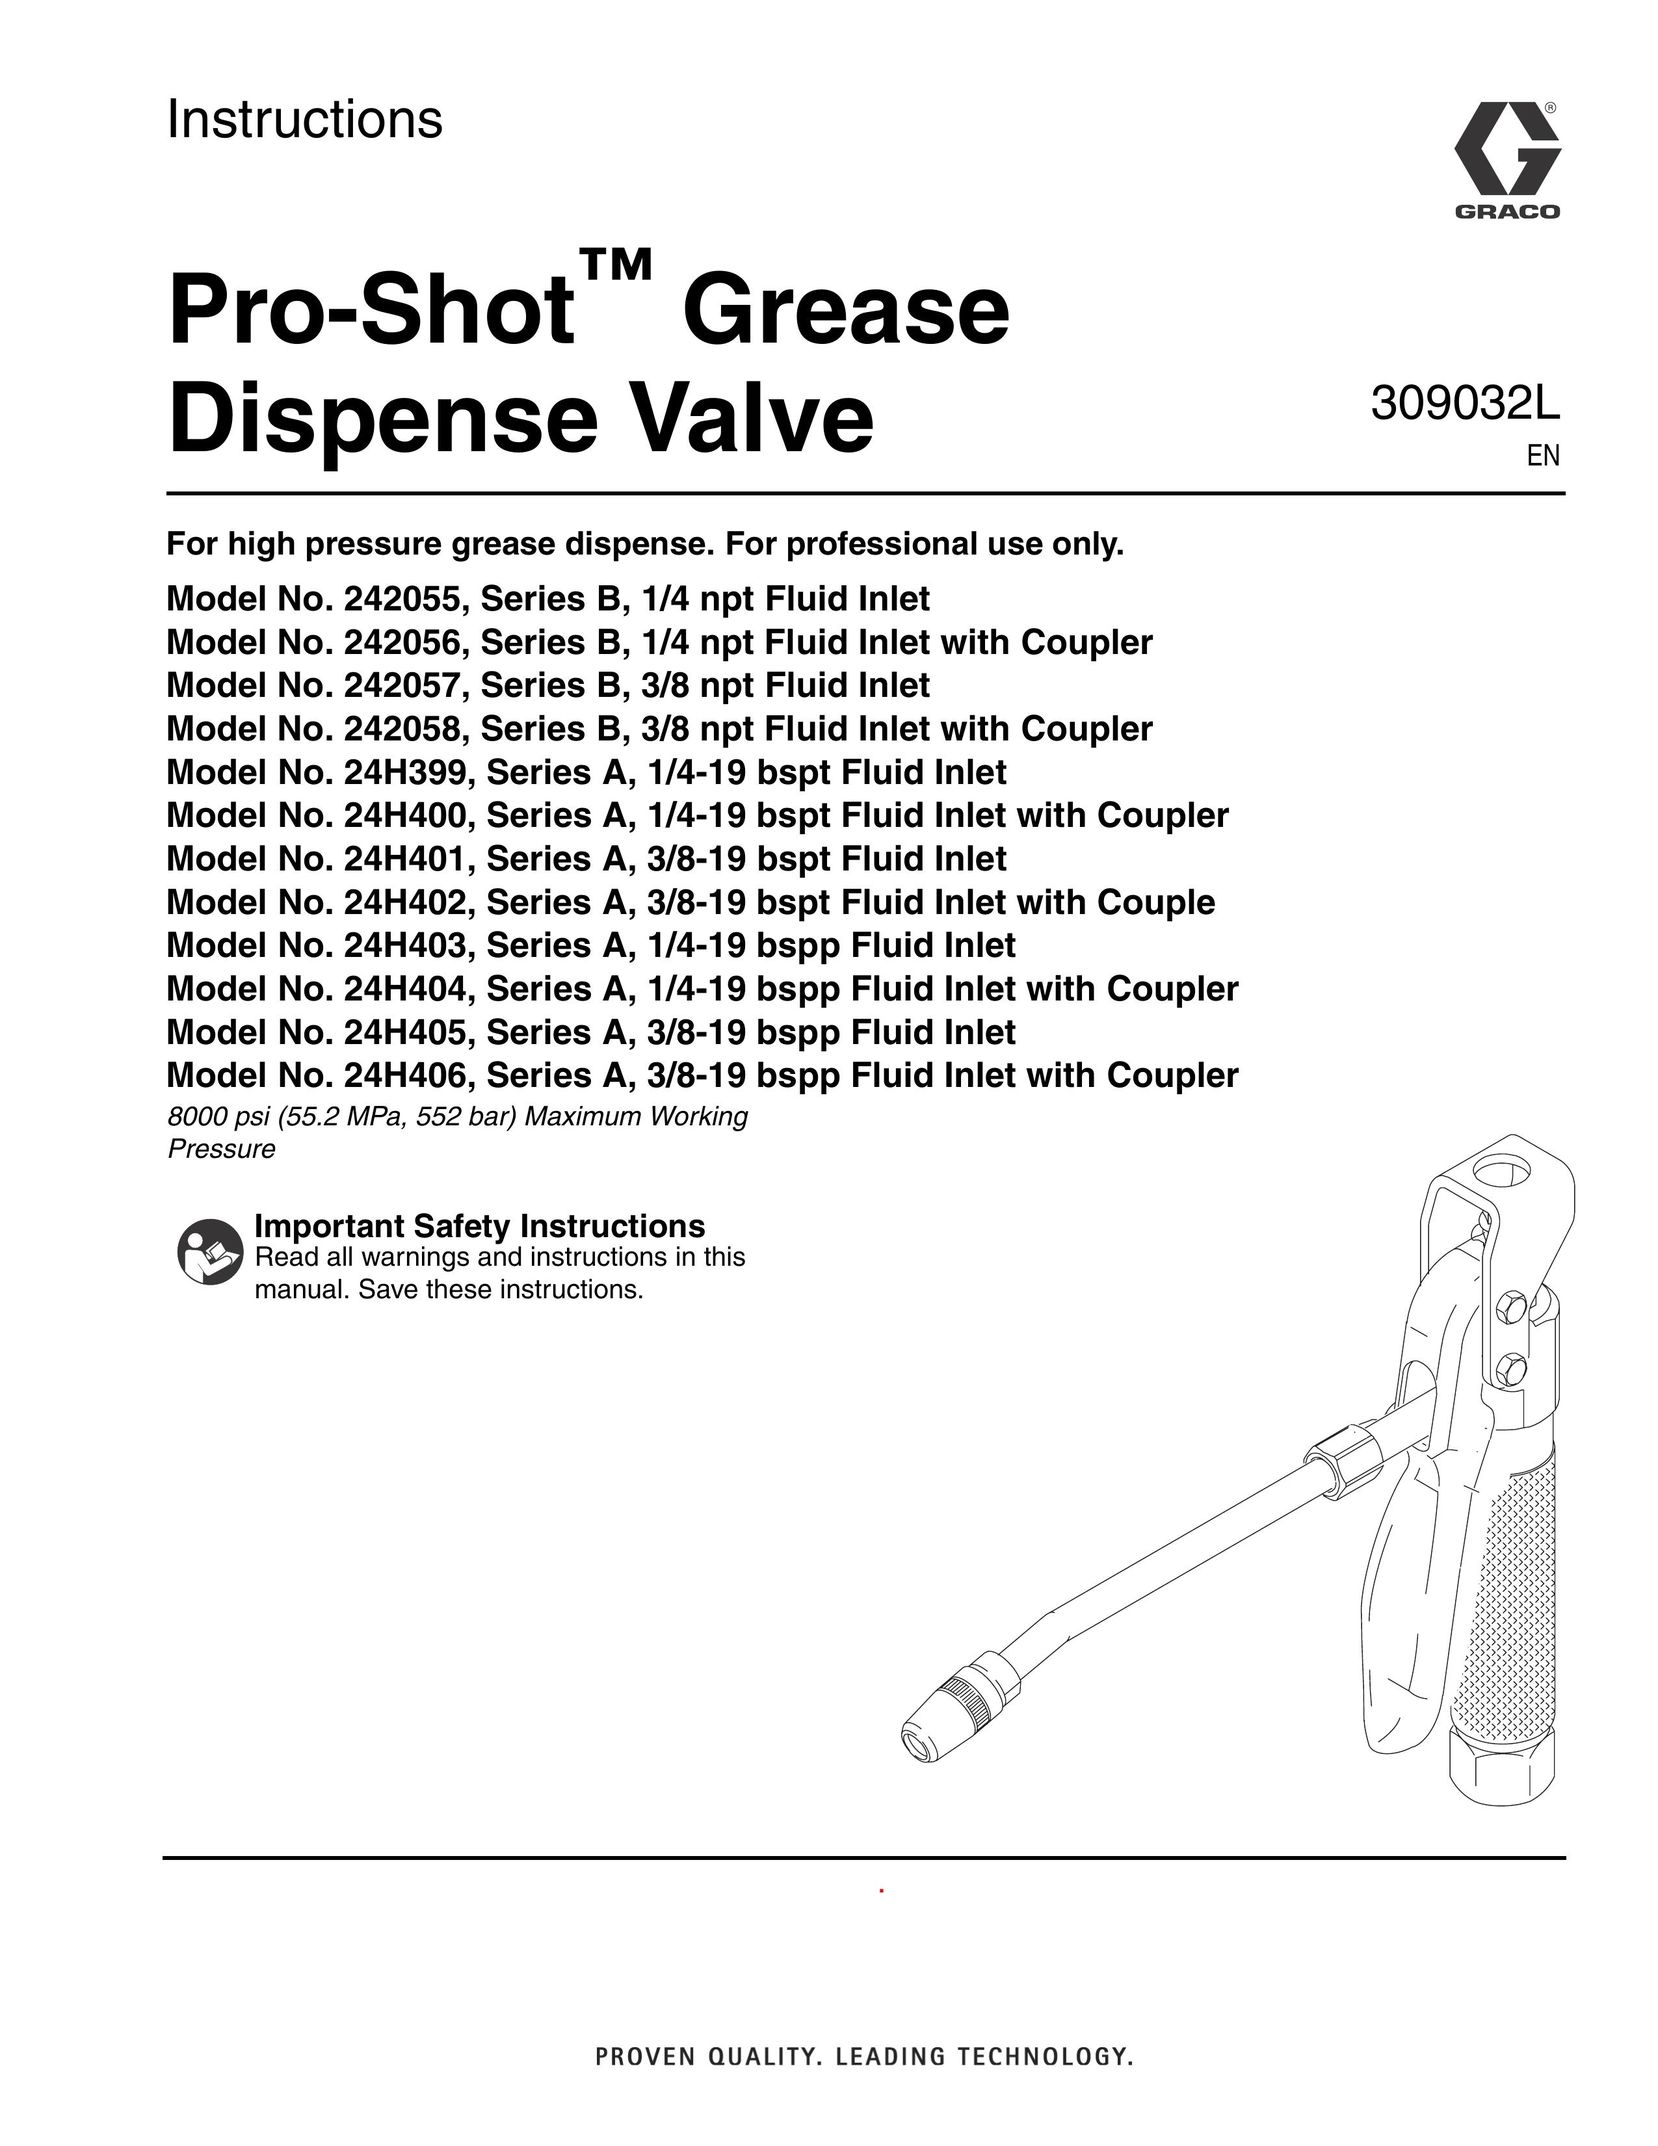 Graco 242056 Glue Gun User Manual